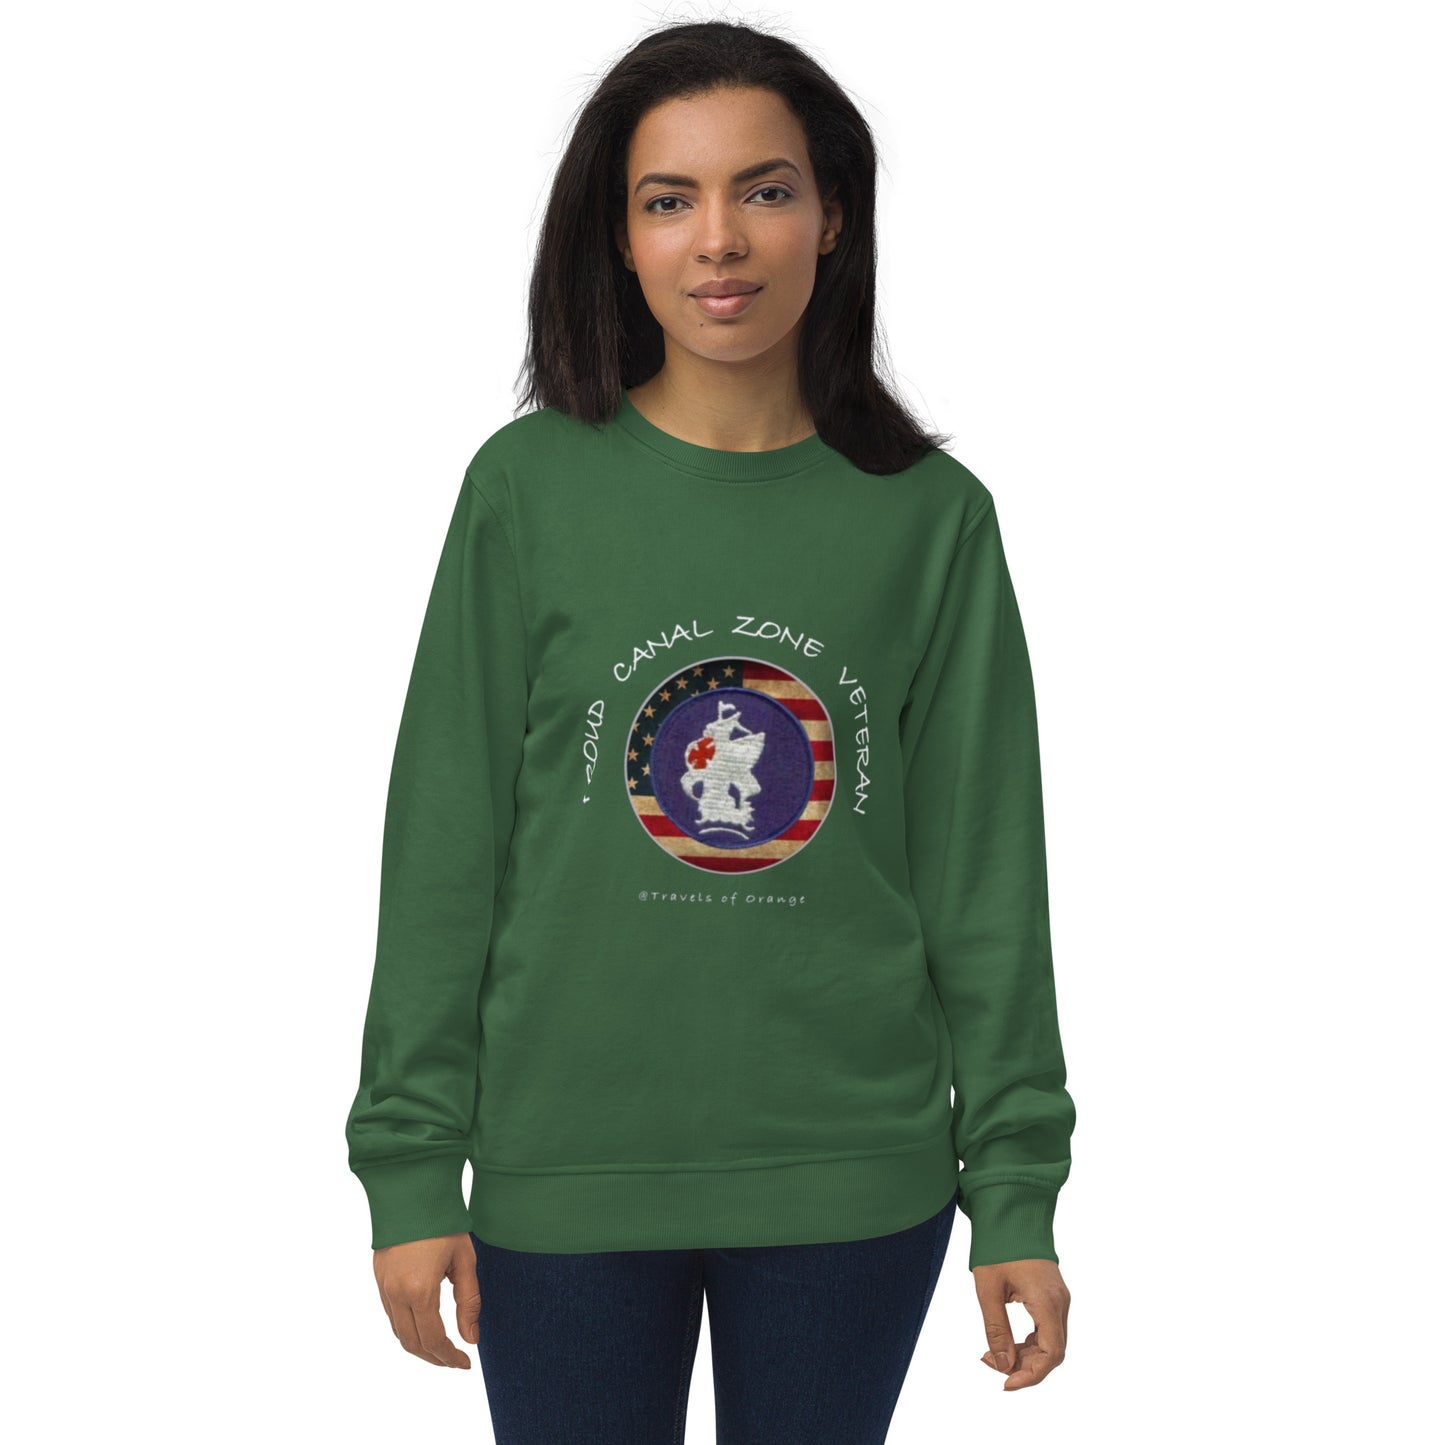 Panama Canal Zone - Proud Canal Zone Veteran Raglan Sweatshirt - Unisex shirt for both men or women